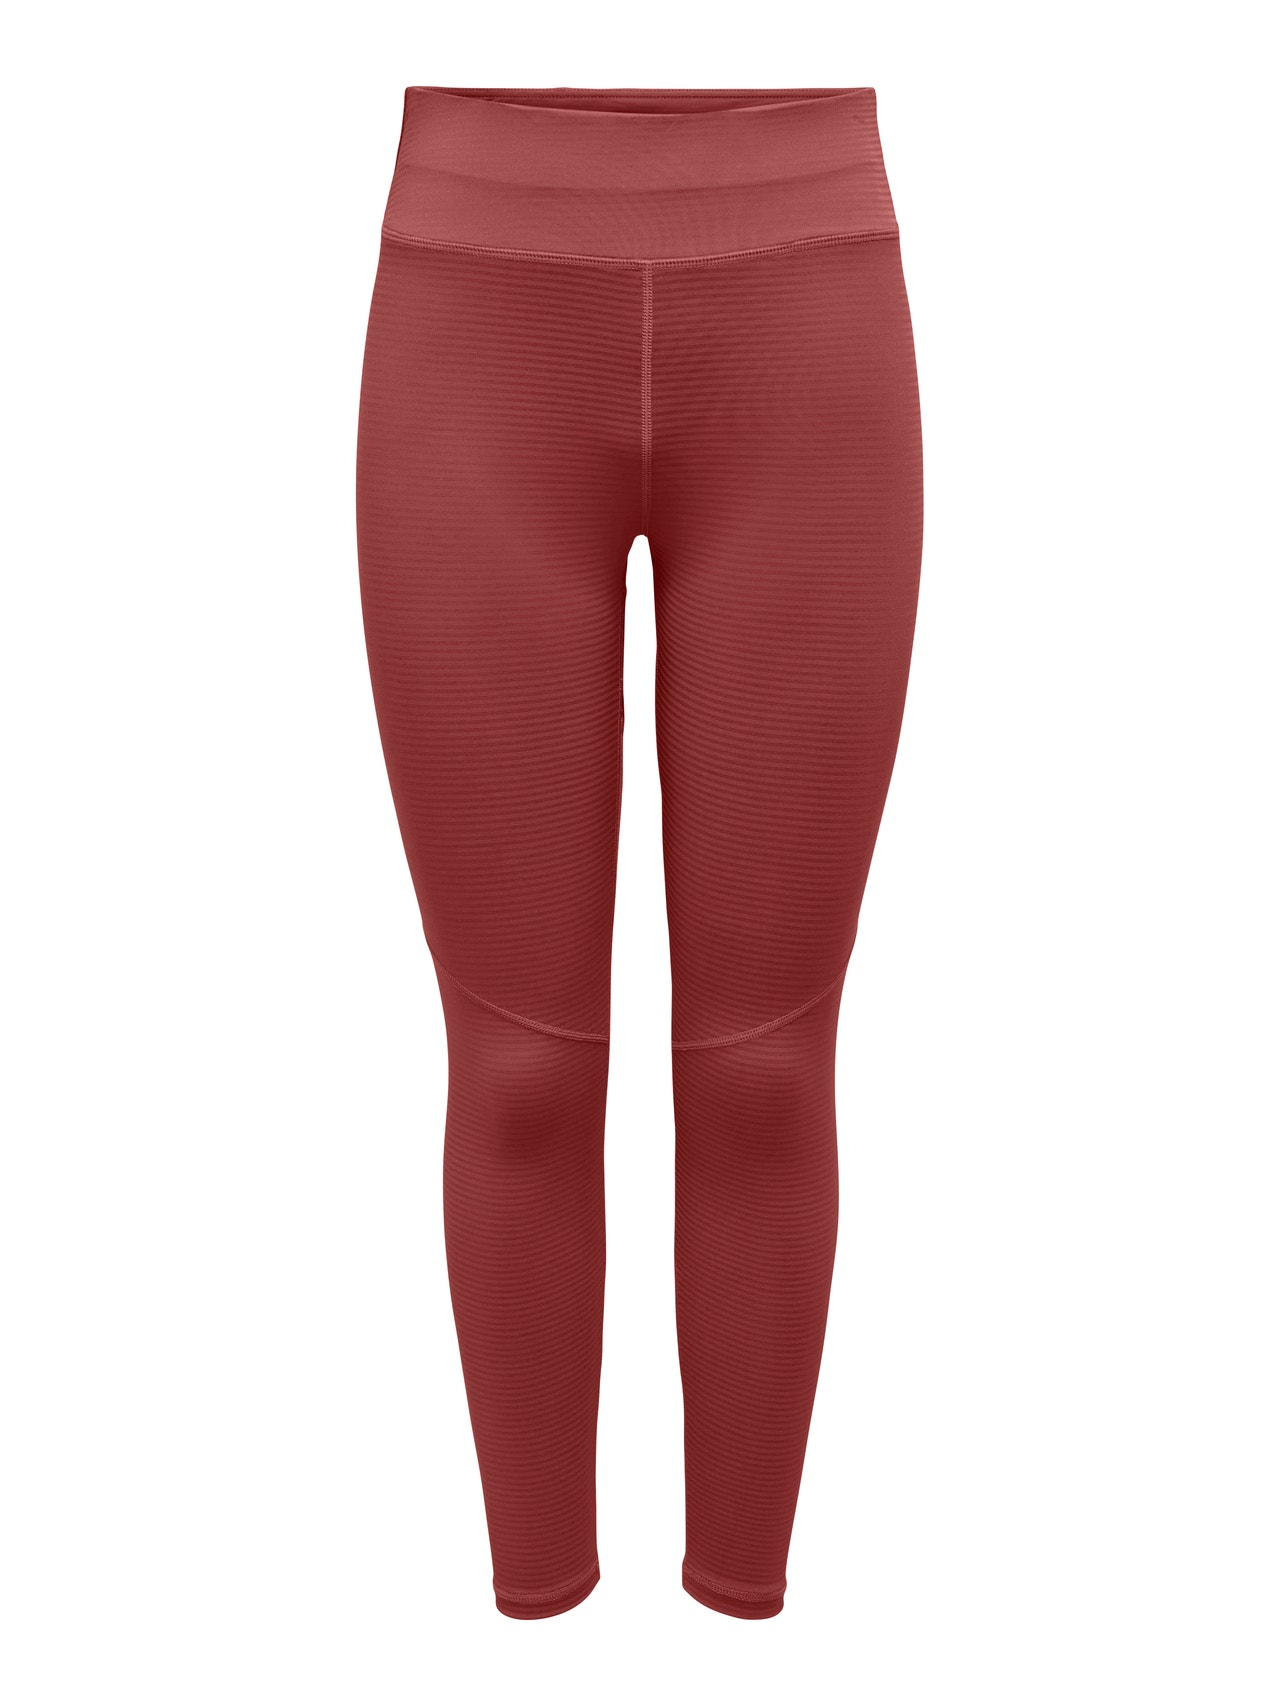 Solid burgundy colored leggings for women